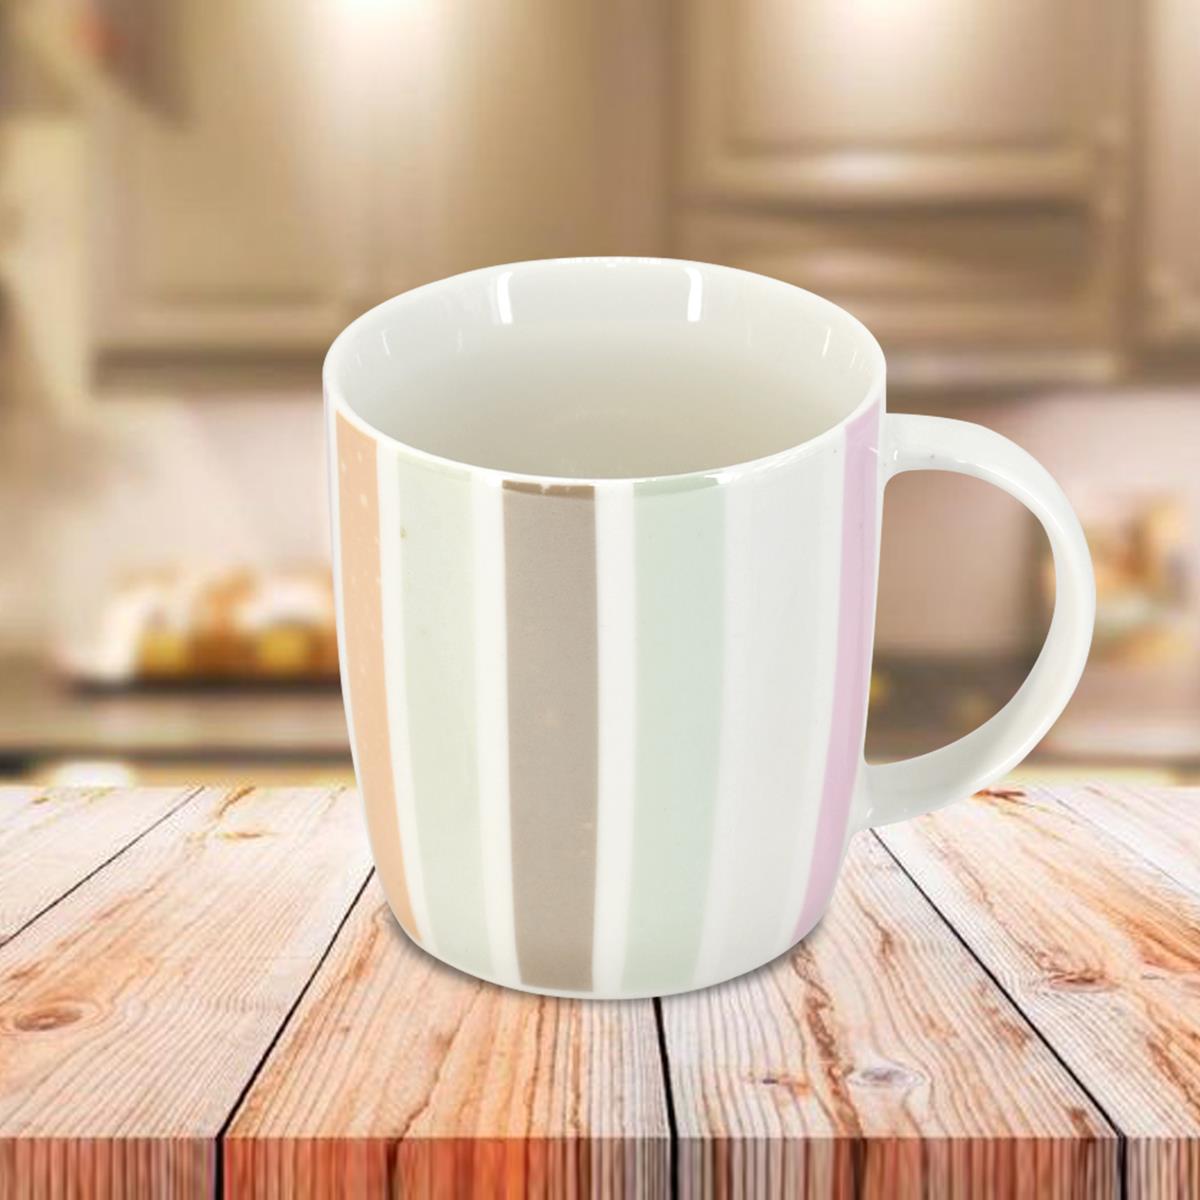 Kookee Ceramic Coffee or Tea Mug with handle for Office, Home or Gifting - 325ml (BPM3758-D)